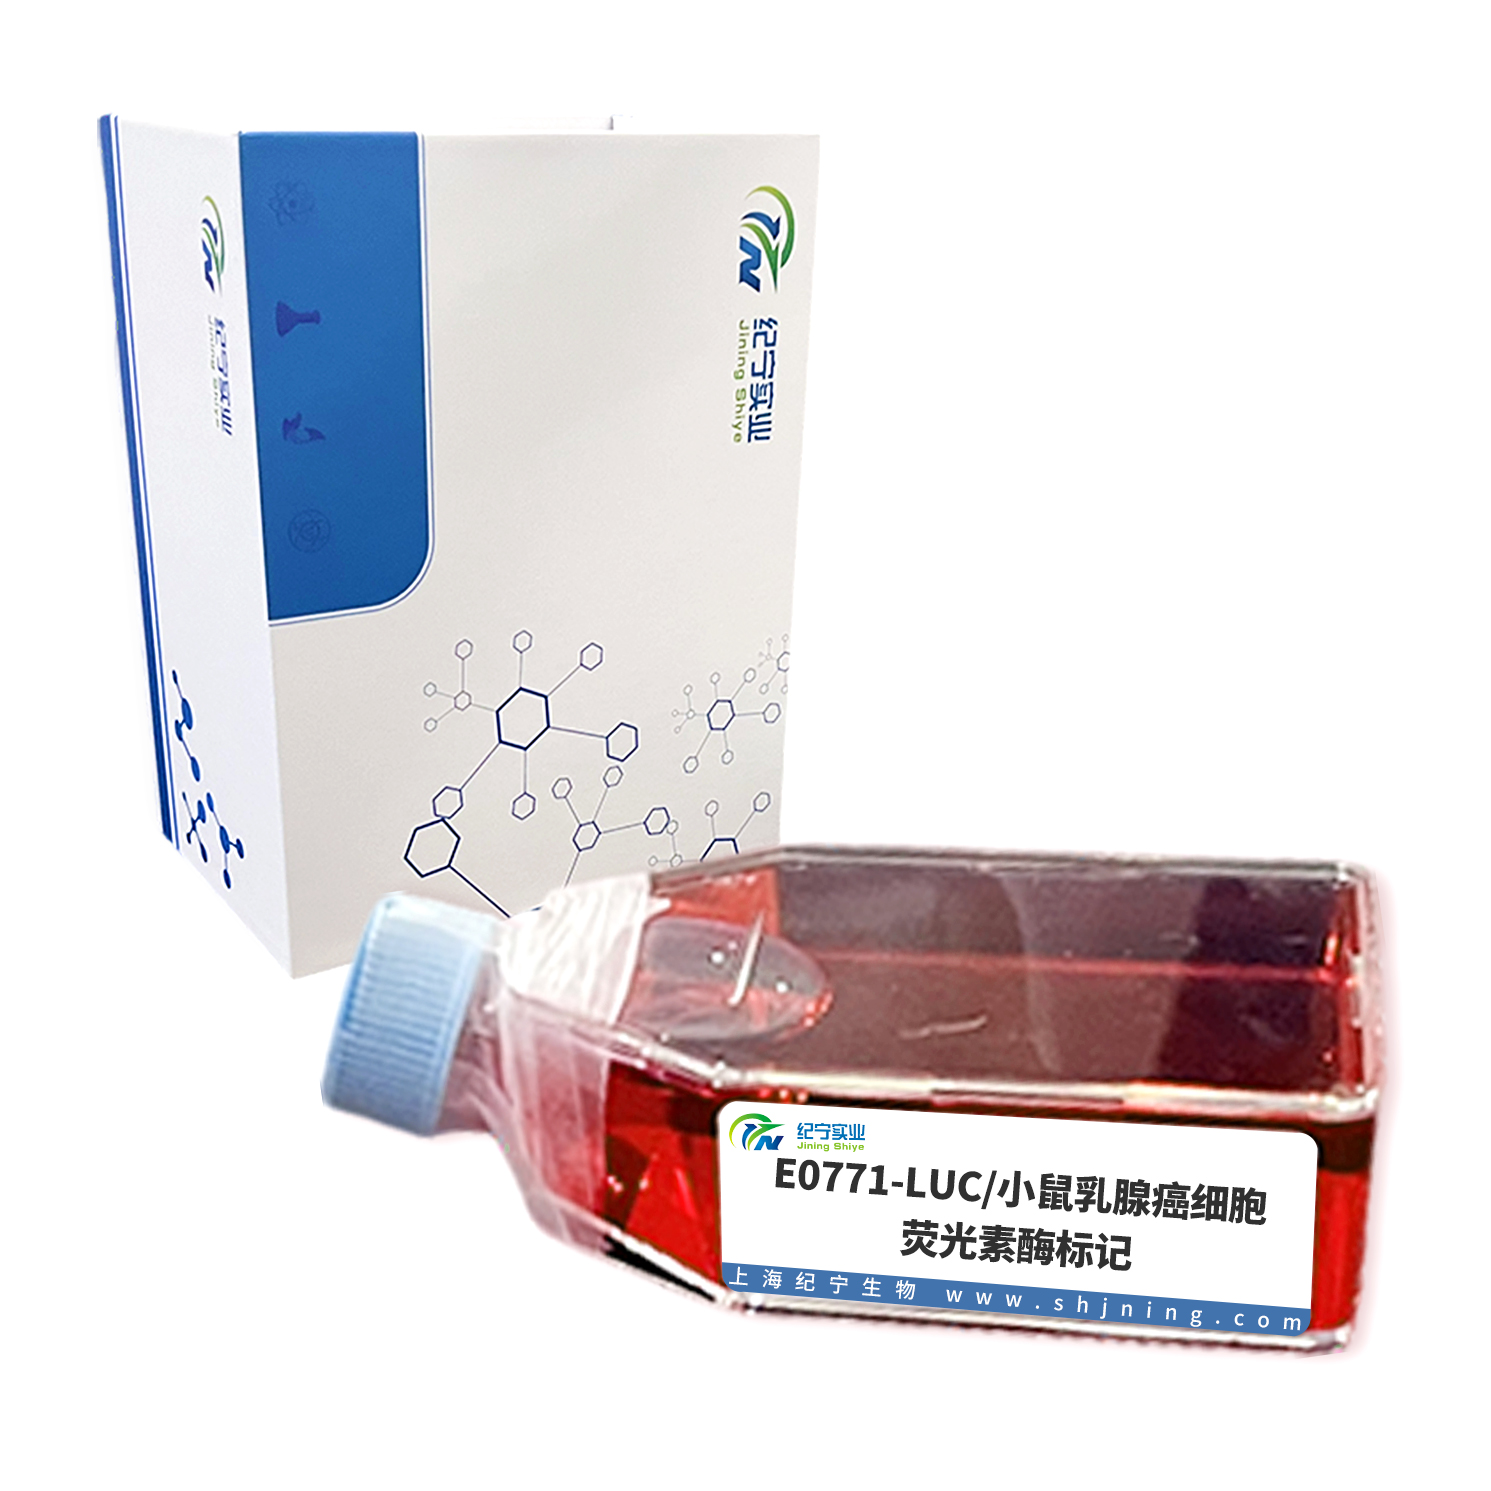 E0771-LUC/小鼠乳腺癌细胞-荧光素酶标记